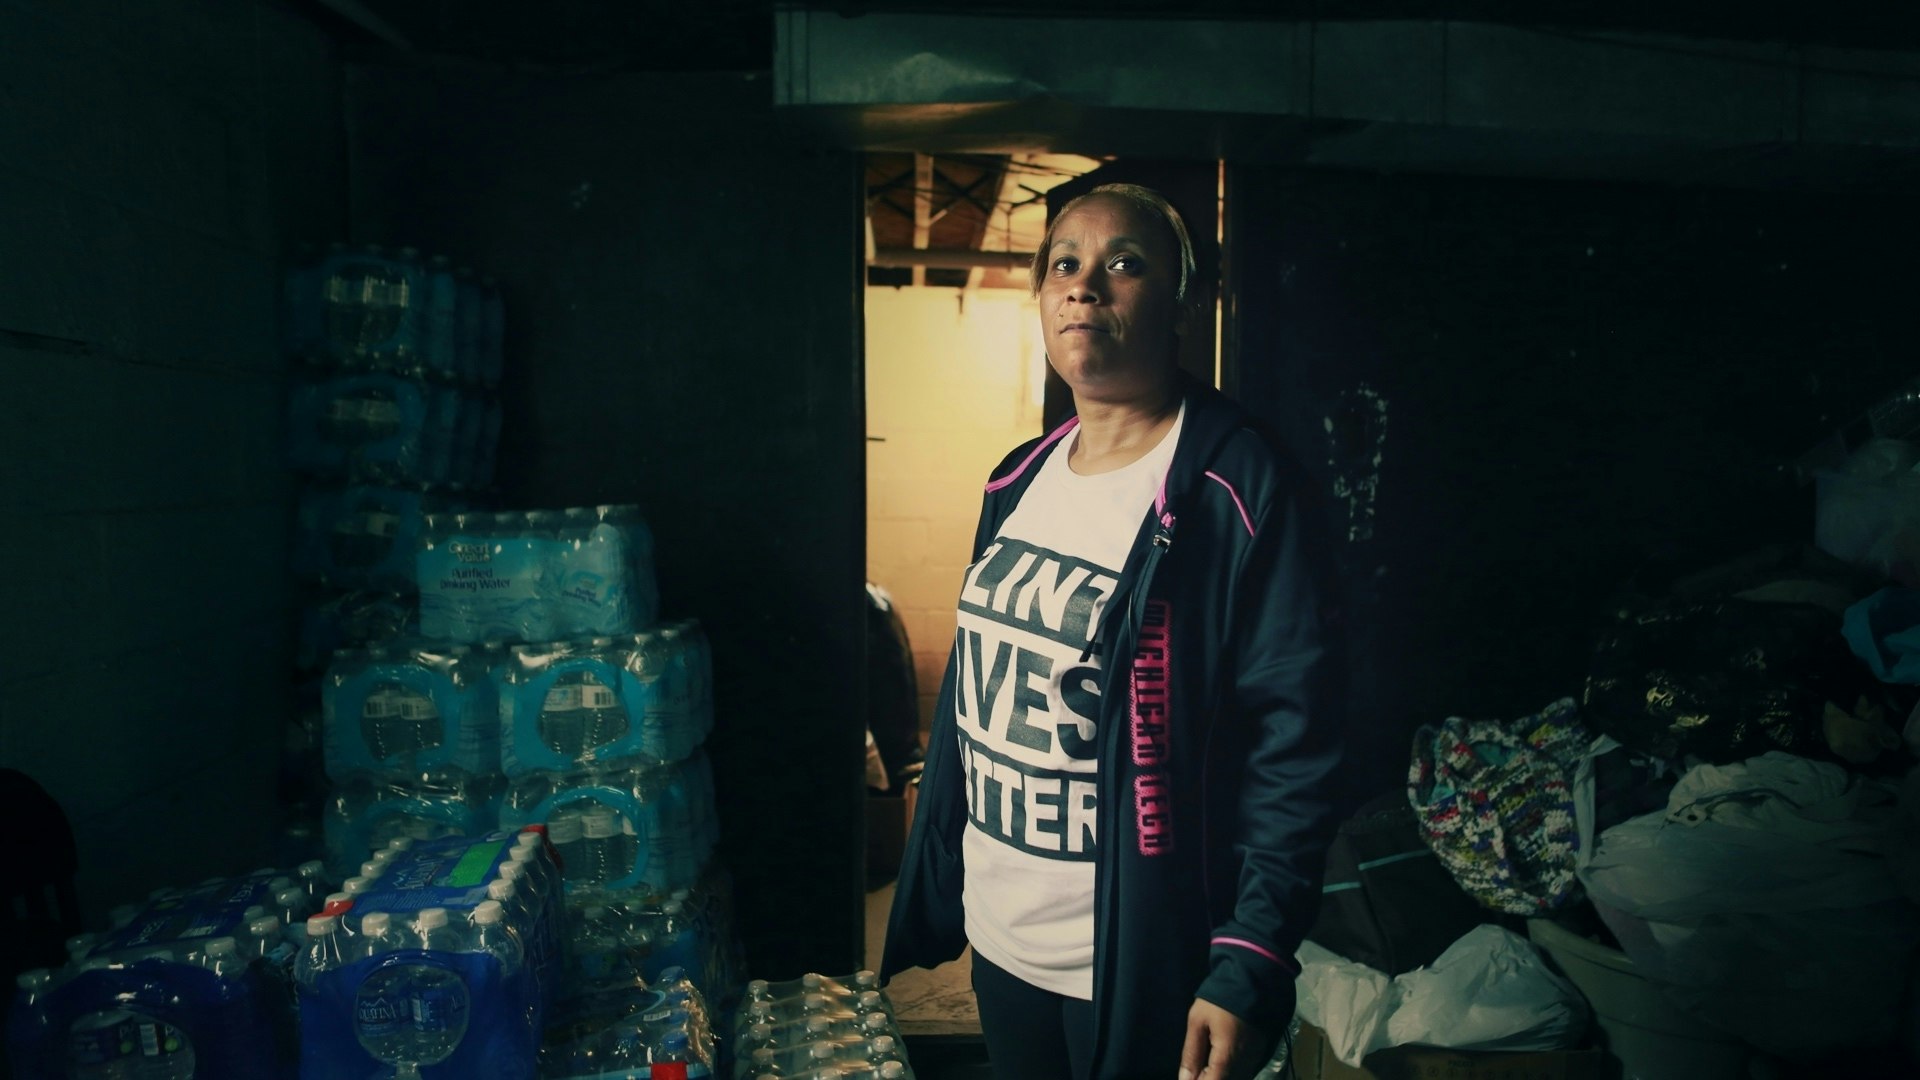 Flint: Inside the public health crisis that shook America